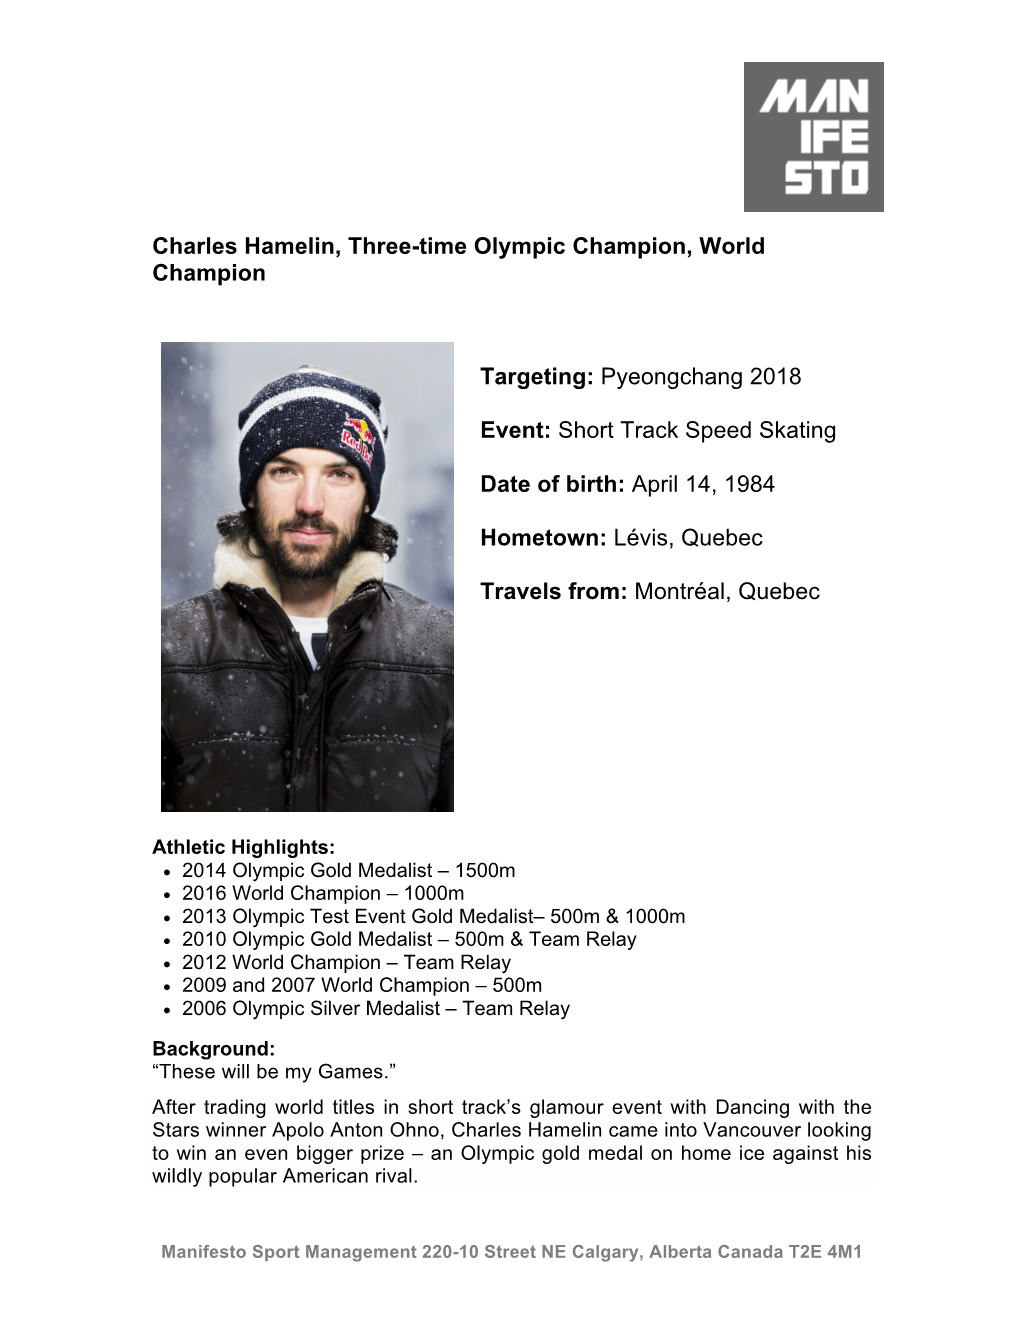 Charles Hamelin, Three-Time Olympic Champion, World Champion Targeting